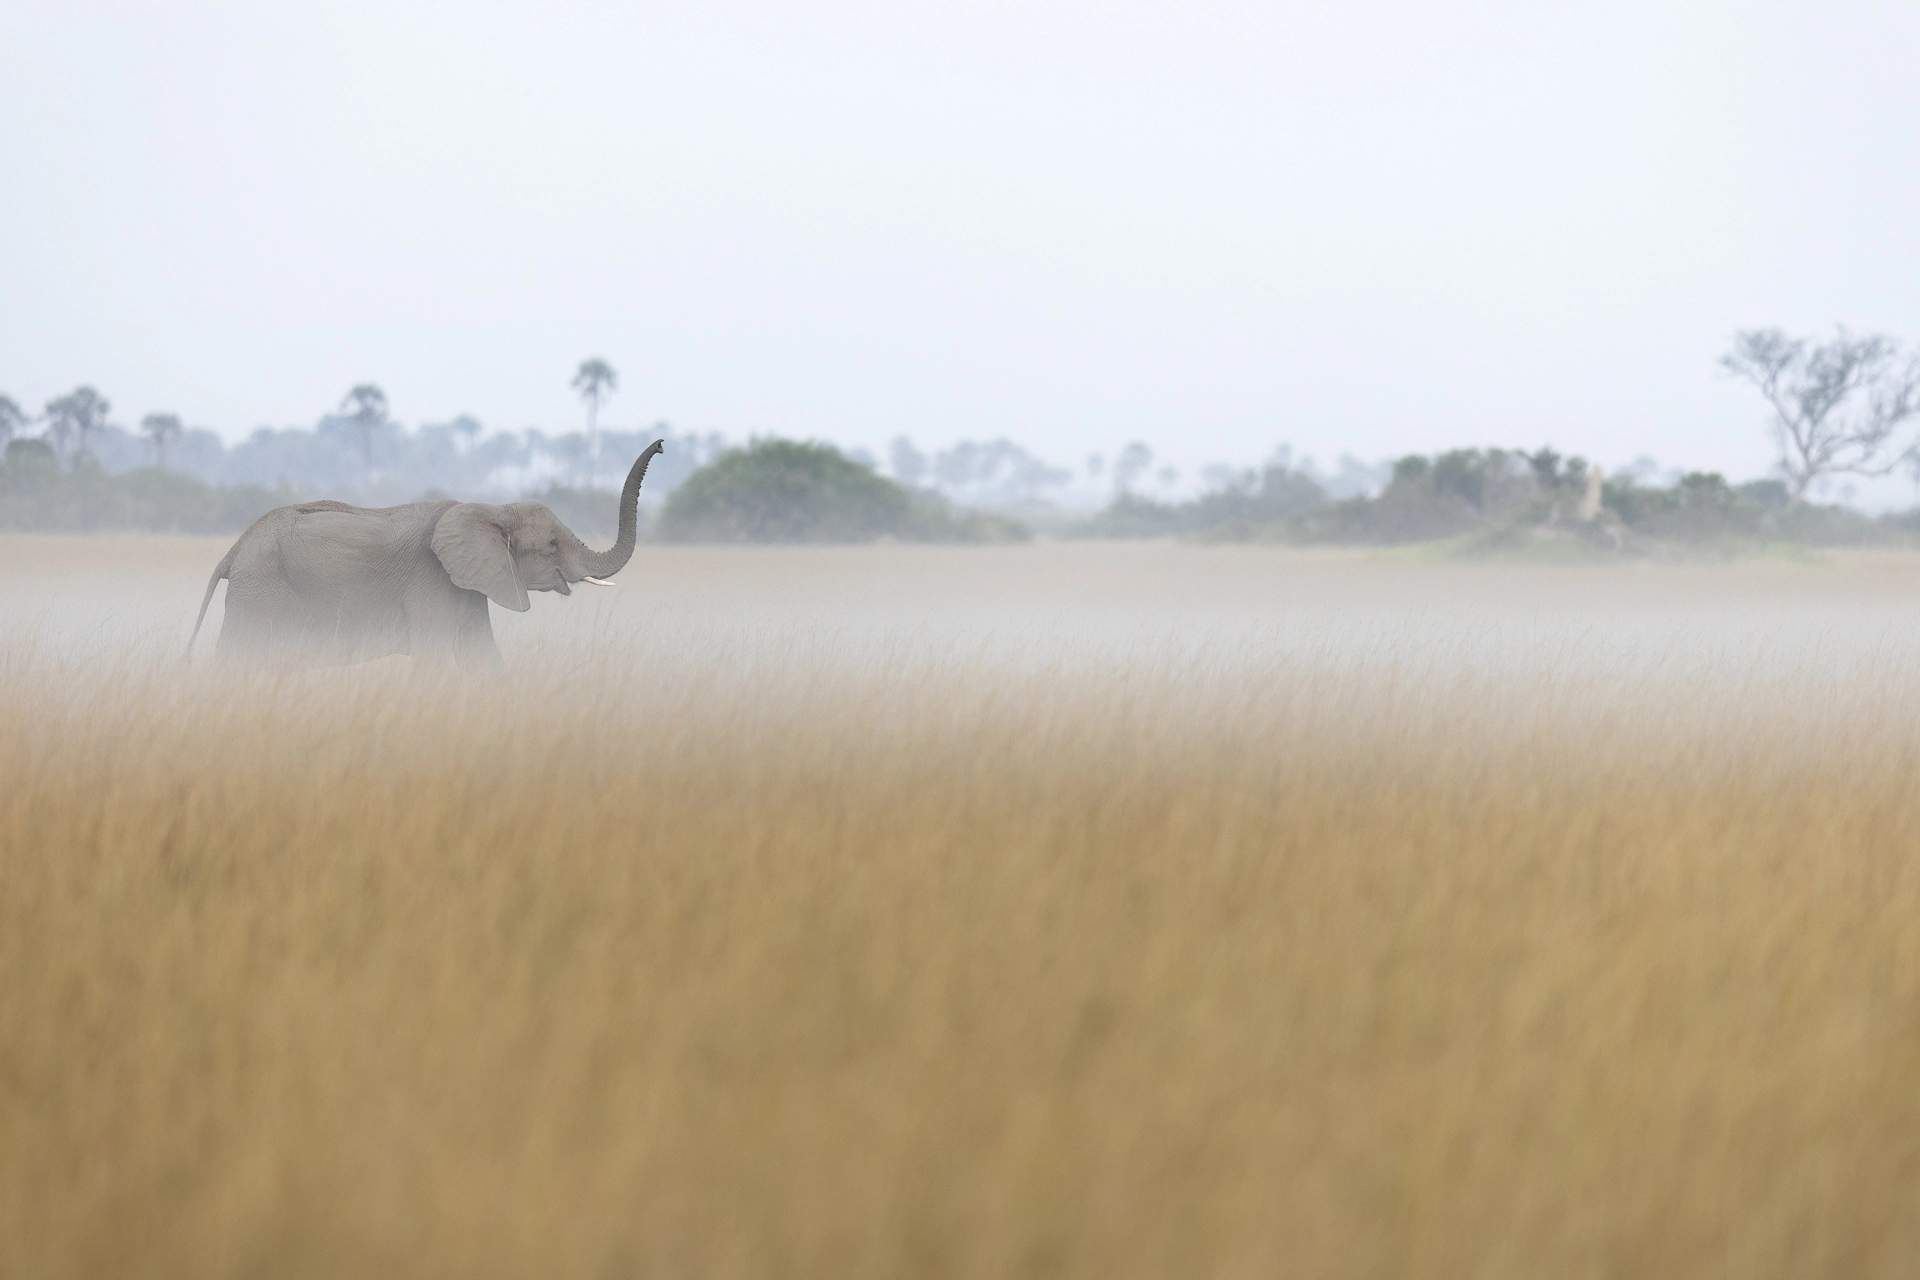 Botswana has some of the world's largest population of elephants